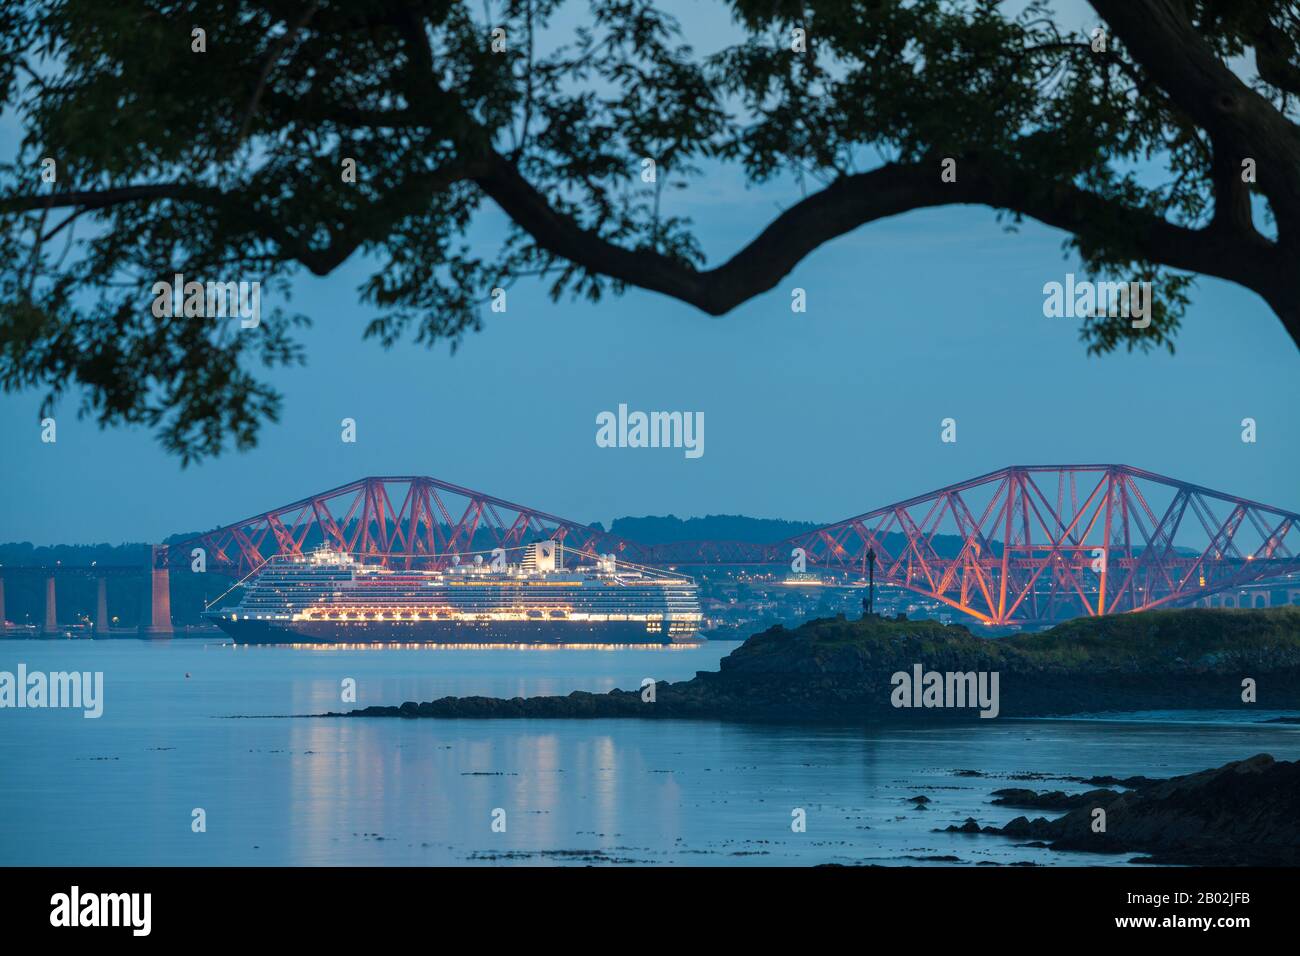 A cruise ship lit up at night under the Forth rail Bridge near Edinburgh Scotland. Stock Photo